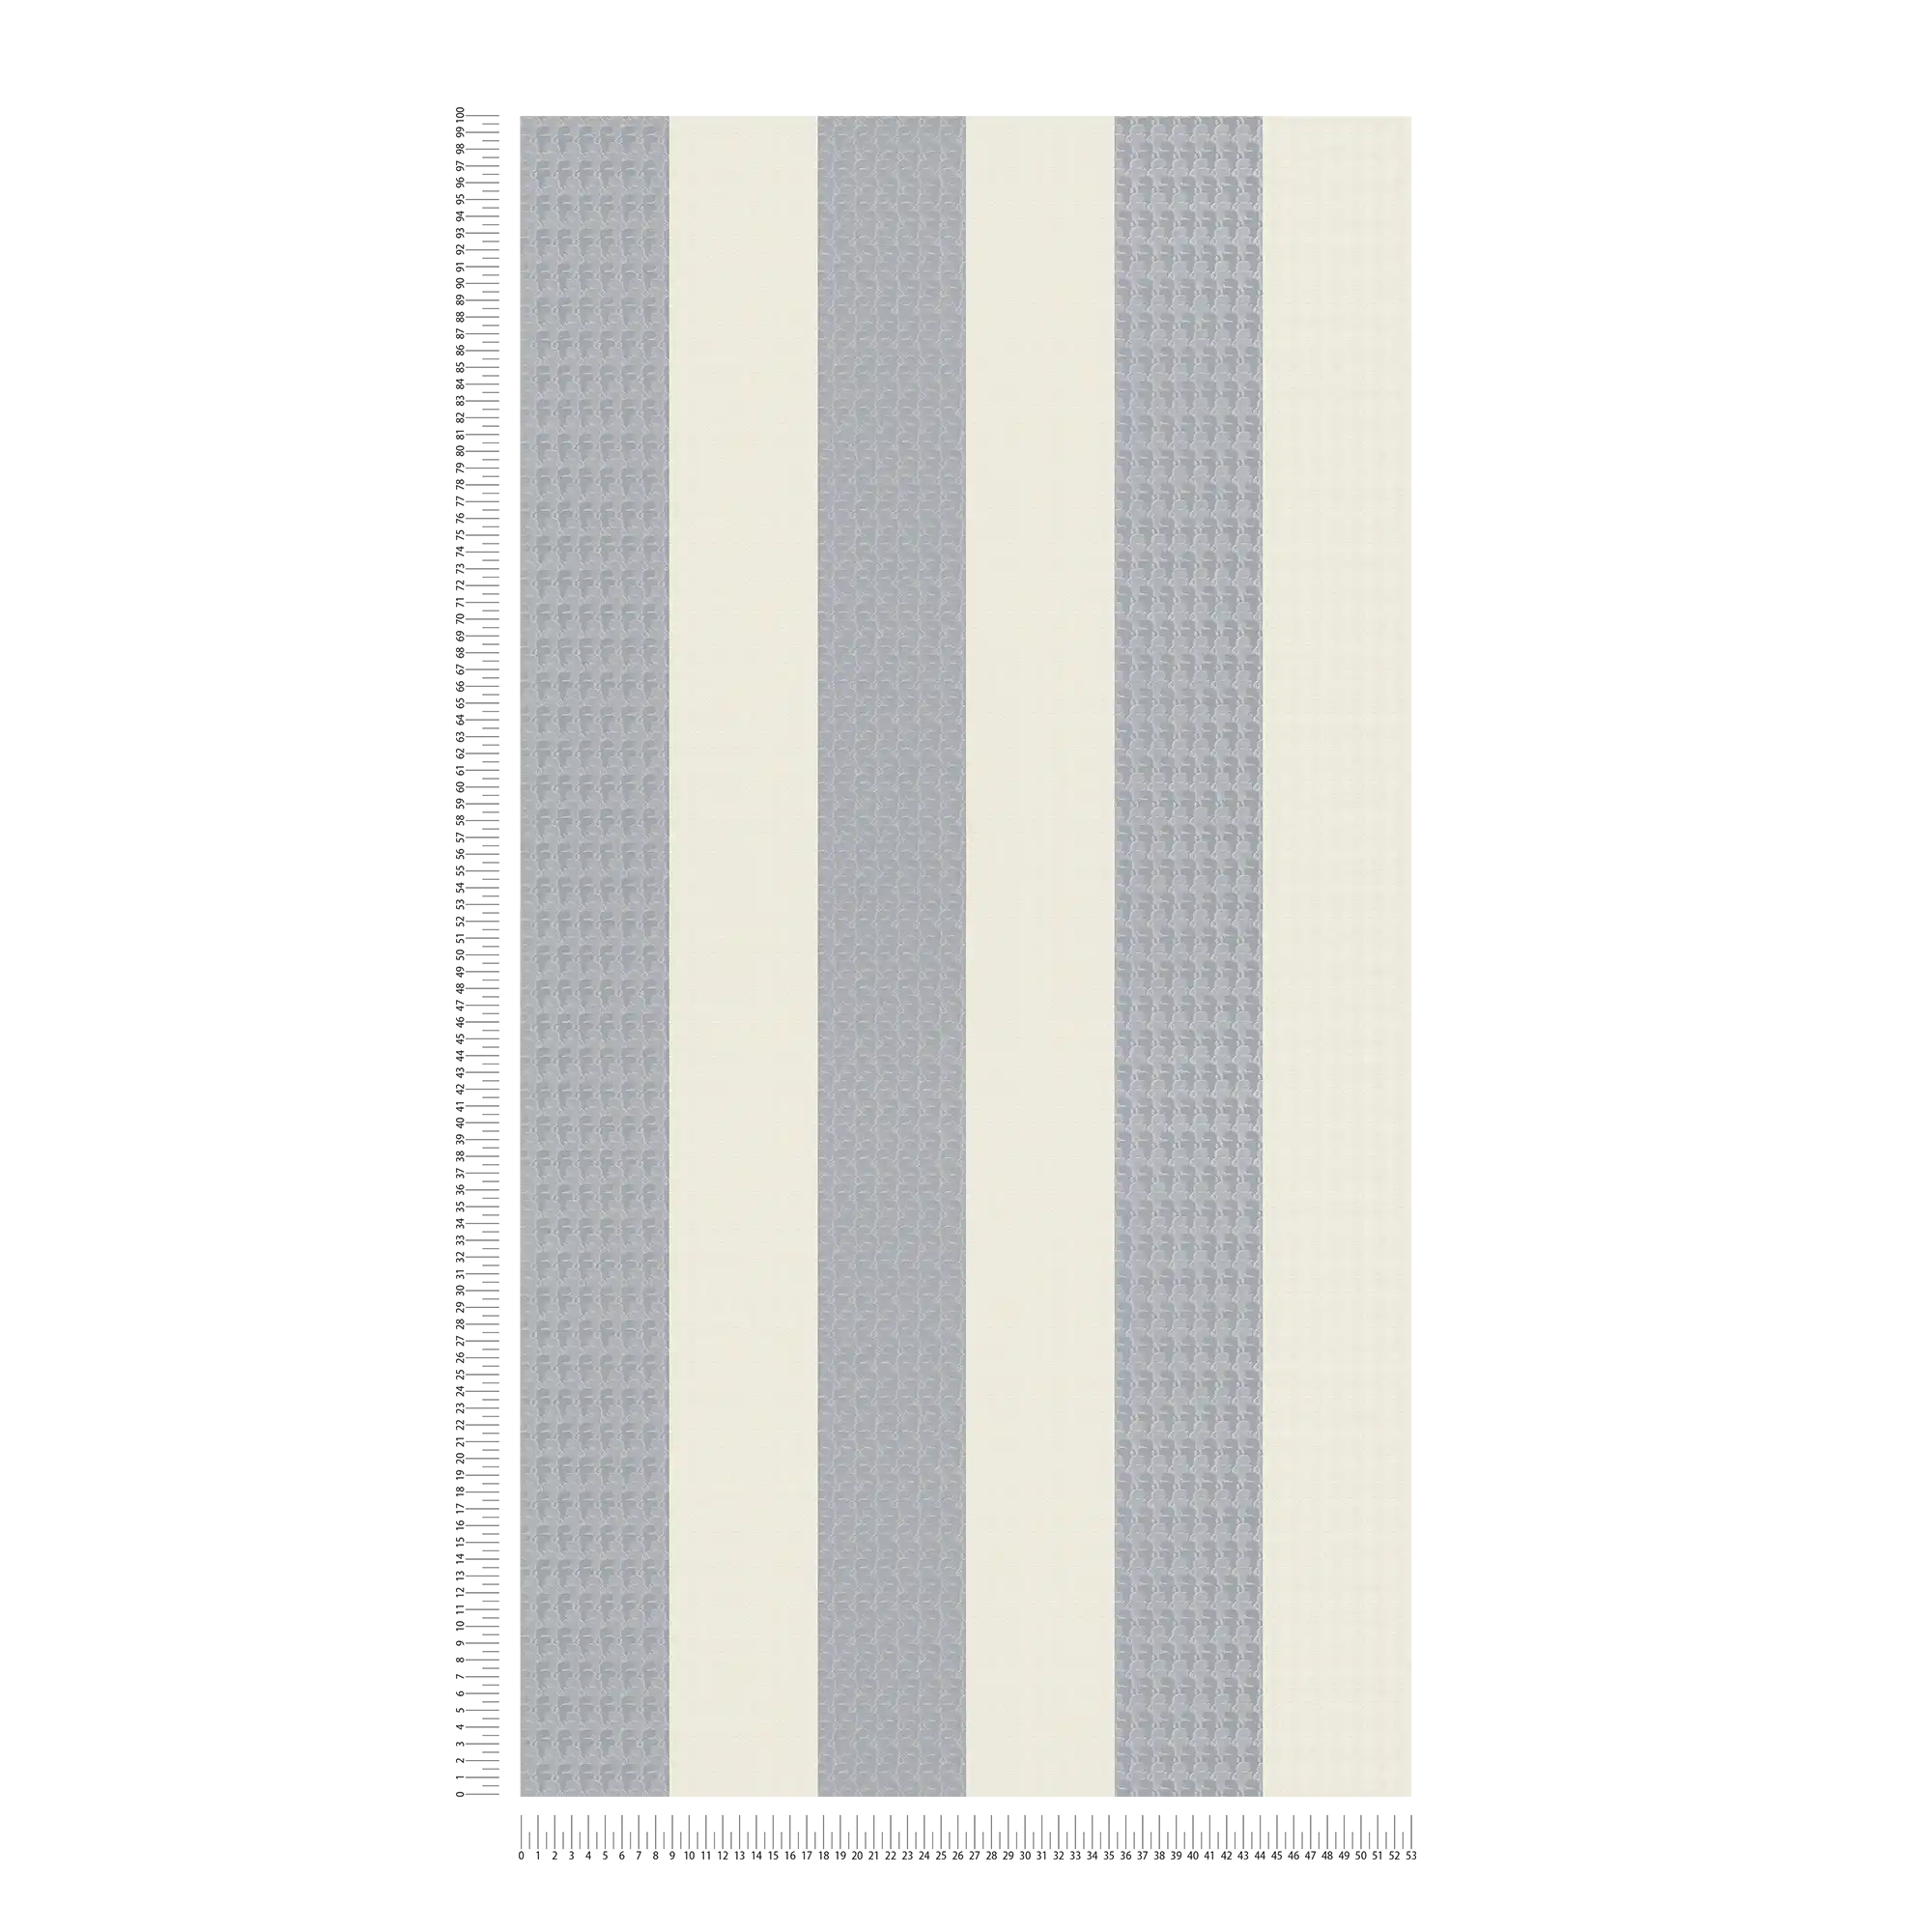             Papel pintado Karl LAGERFELD rayas y textura - crema, gris
        